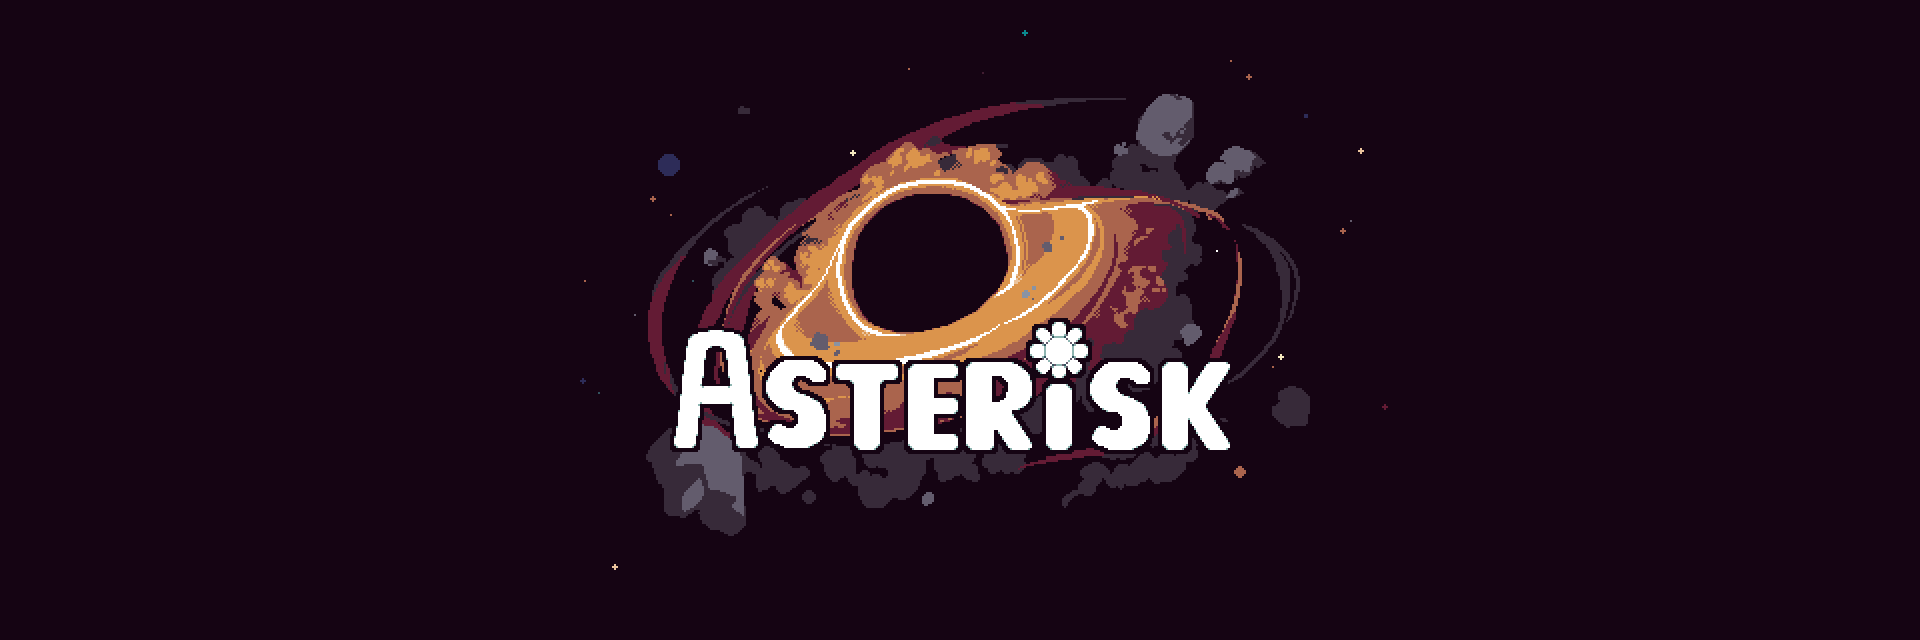 Asterisk - Jam Version